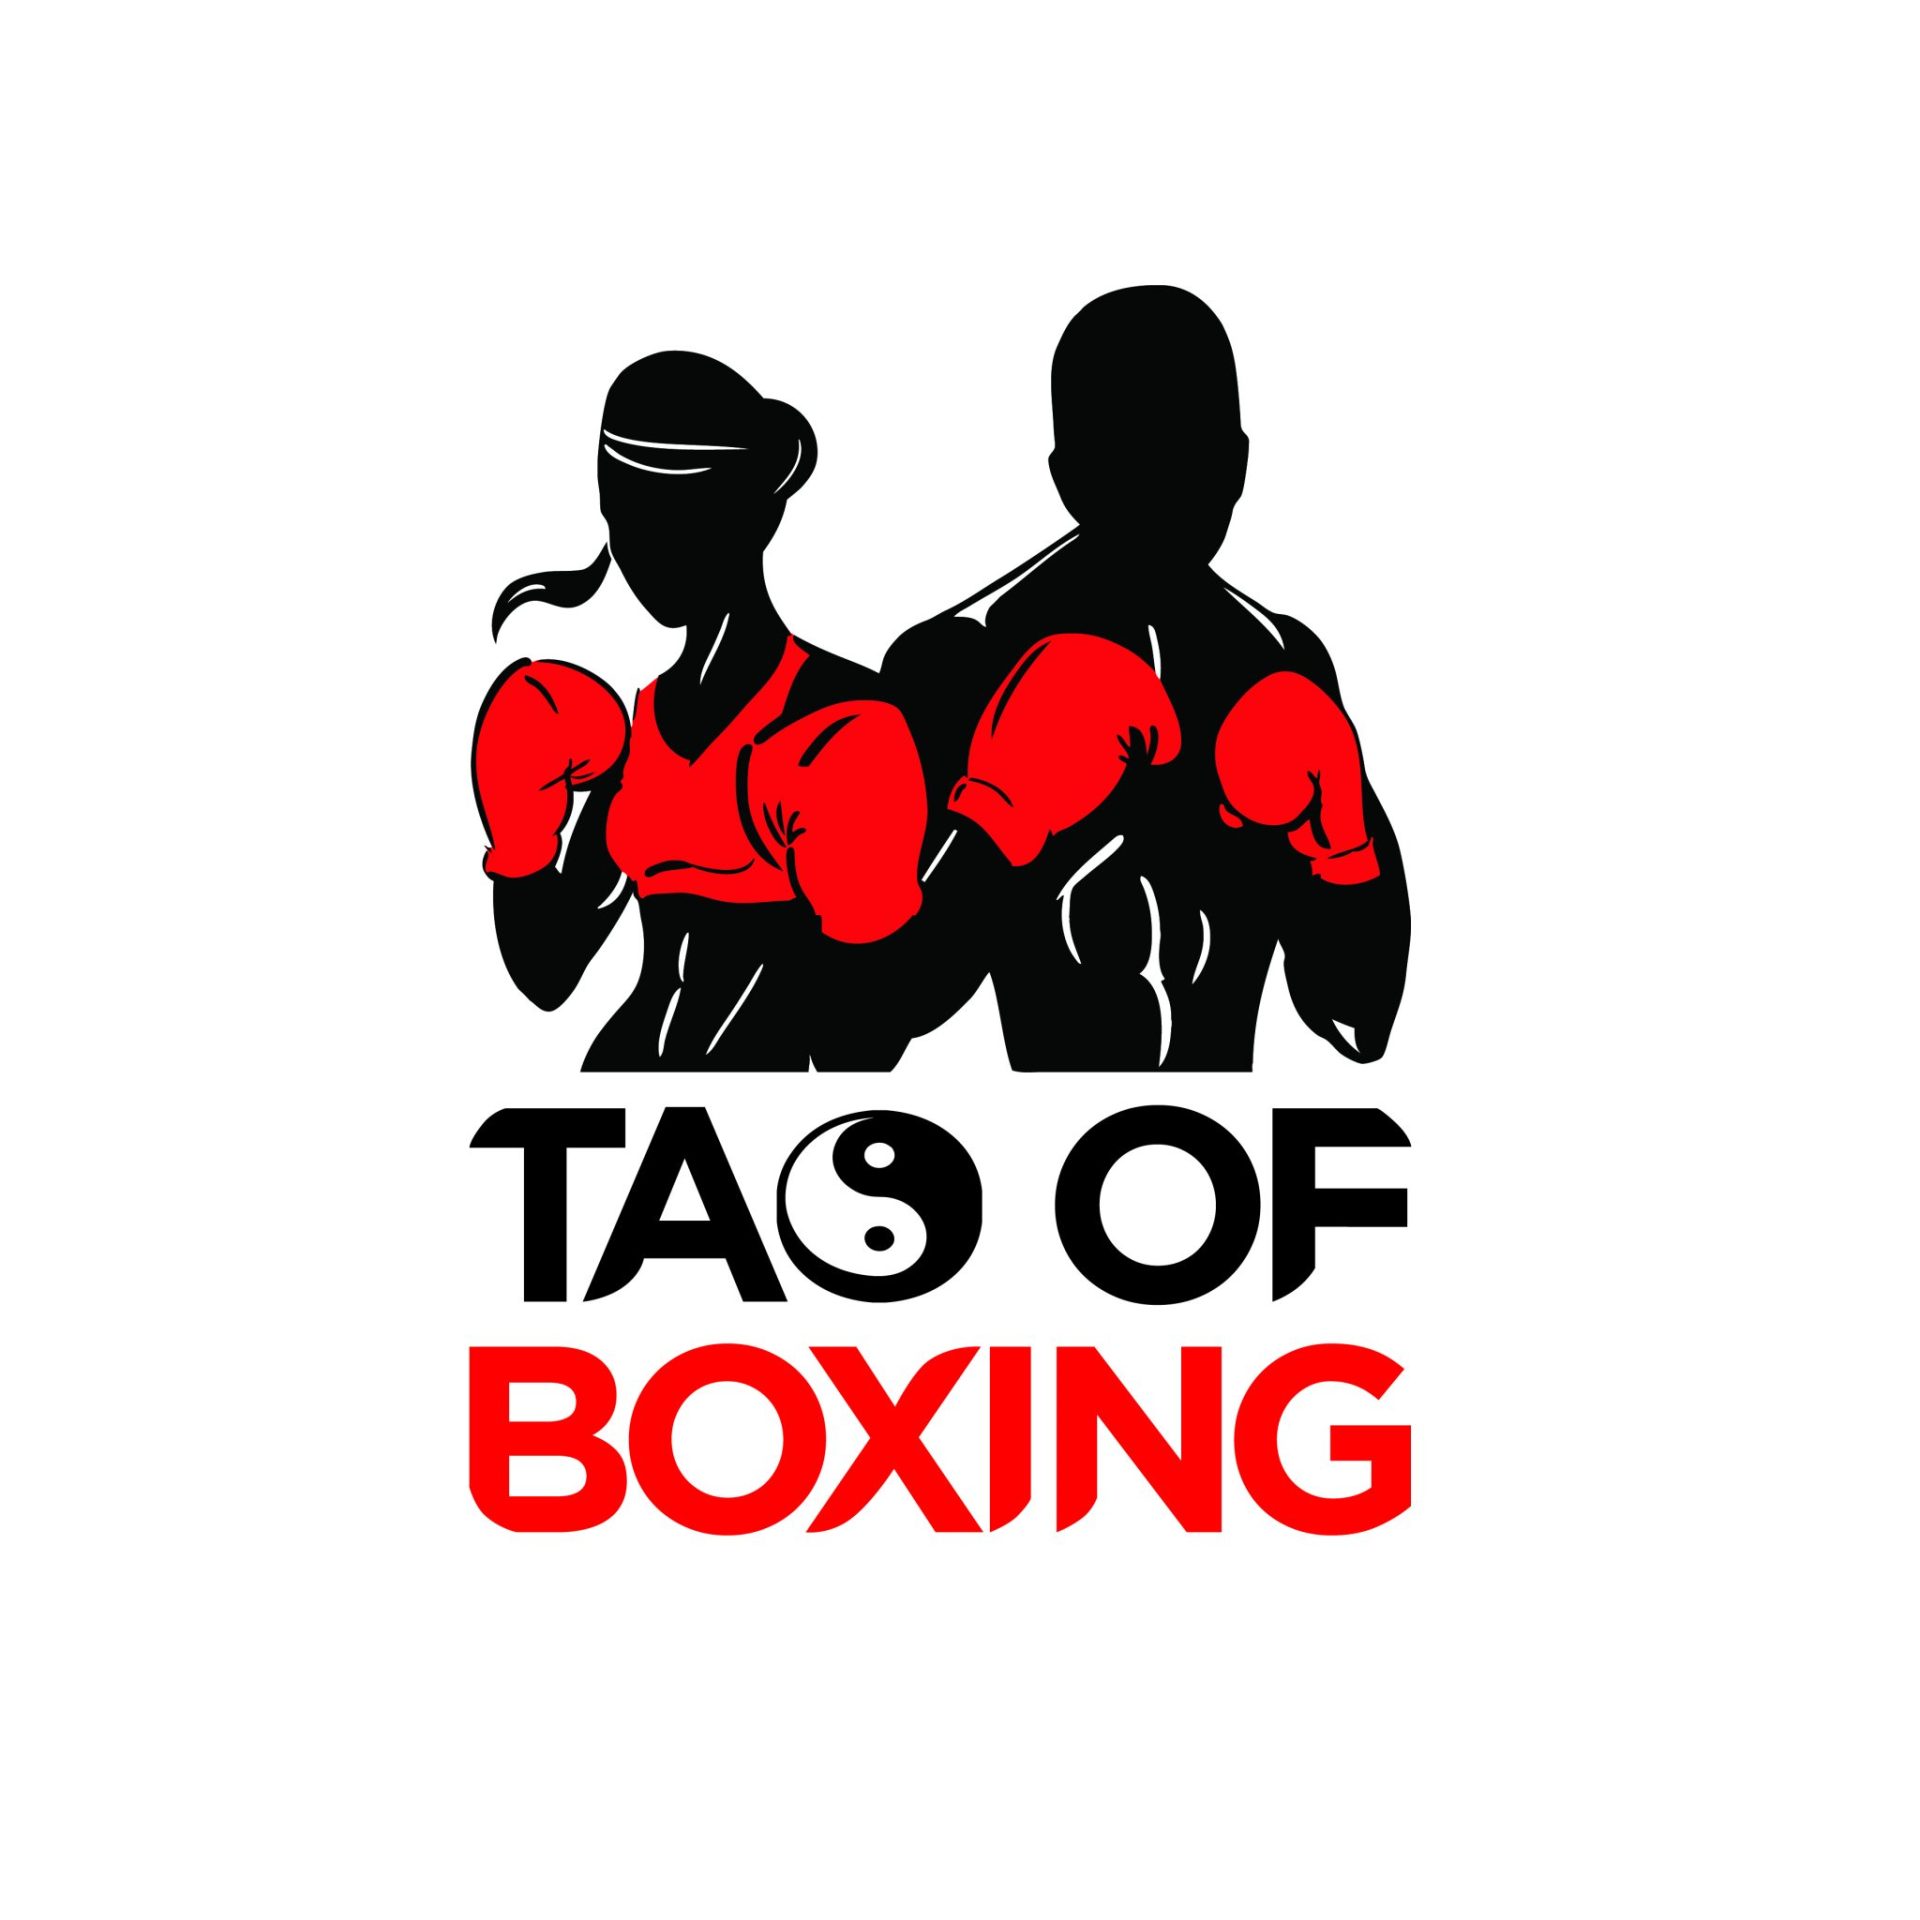 boxing logo ideas 2